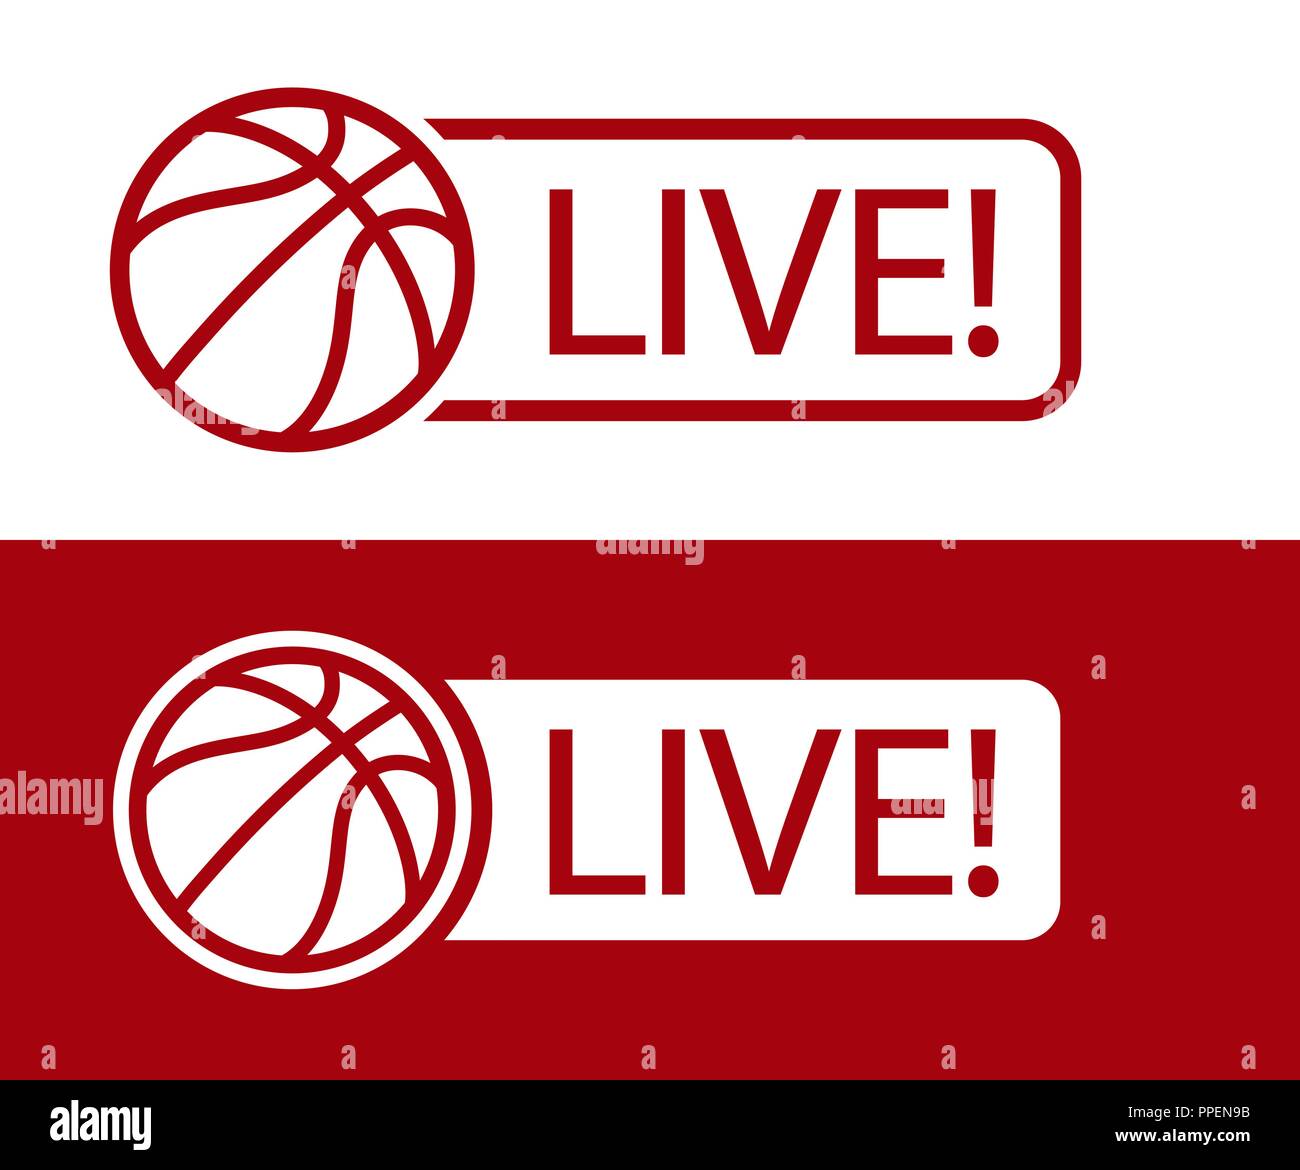 Match de basket-ball licône live tv sport vector illustration Image Vectorielle Stock